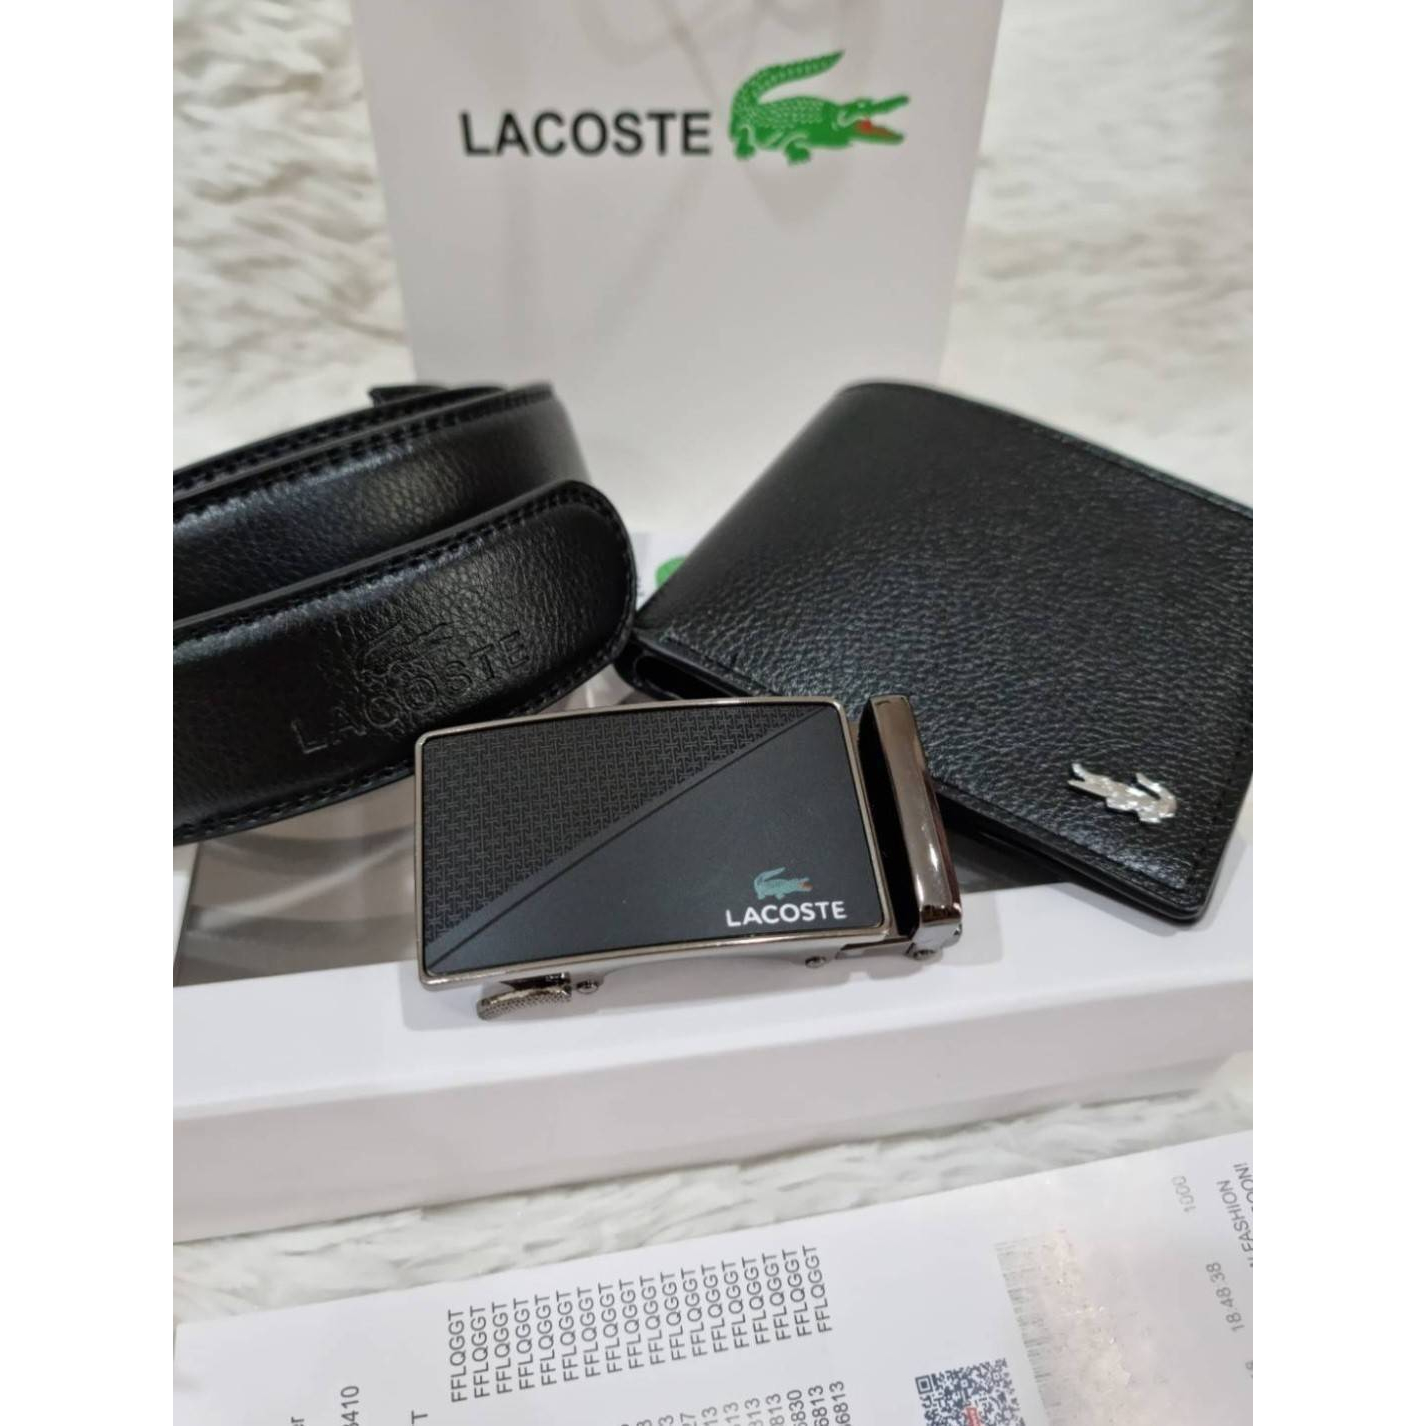 Set เข็มขัดหนัง Lacoste อุปกรณ์ครบ กล่องแบรนด์  ถุงแบรนด์ สายเข็มขัด  หัวเข็มขัด กระเป๋าตังค์